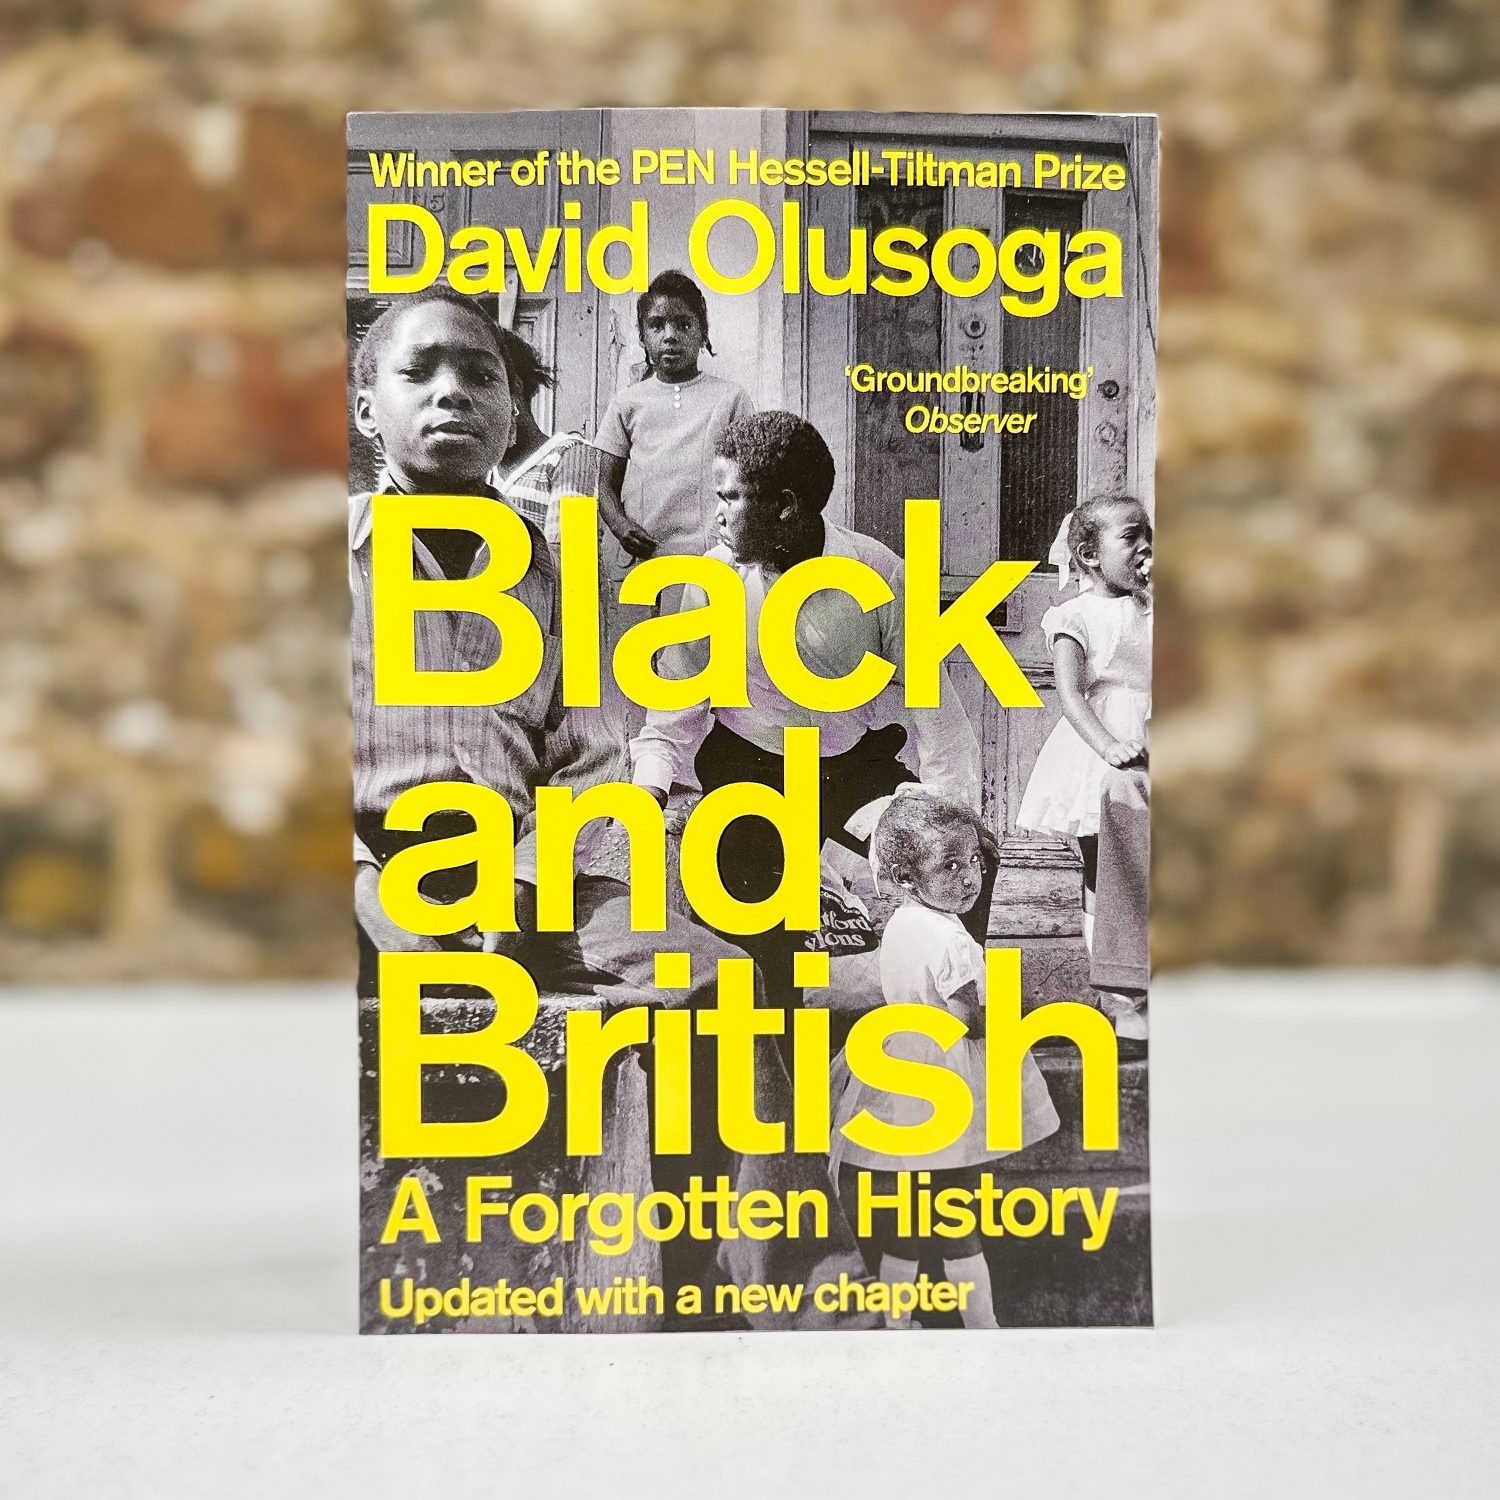 Black and British (book) by David Olusoga